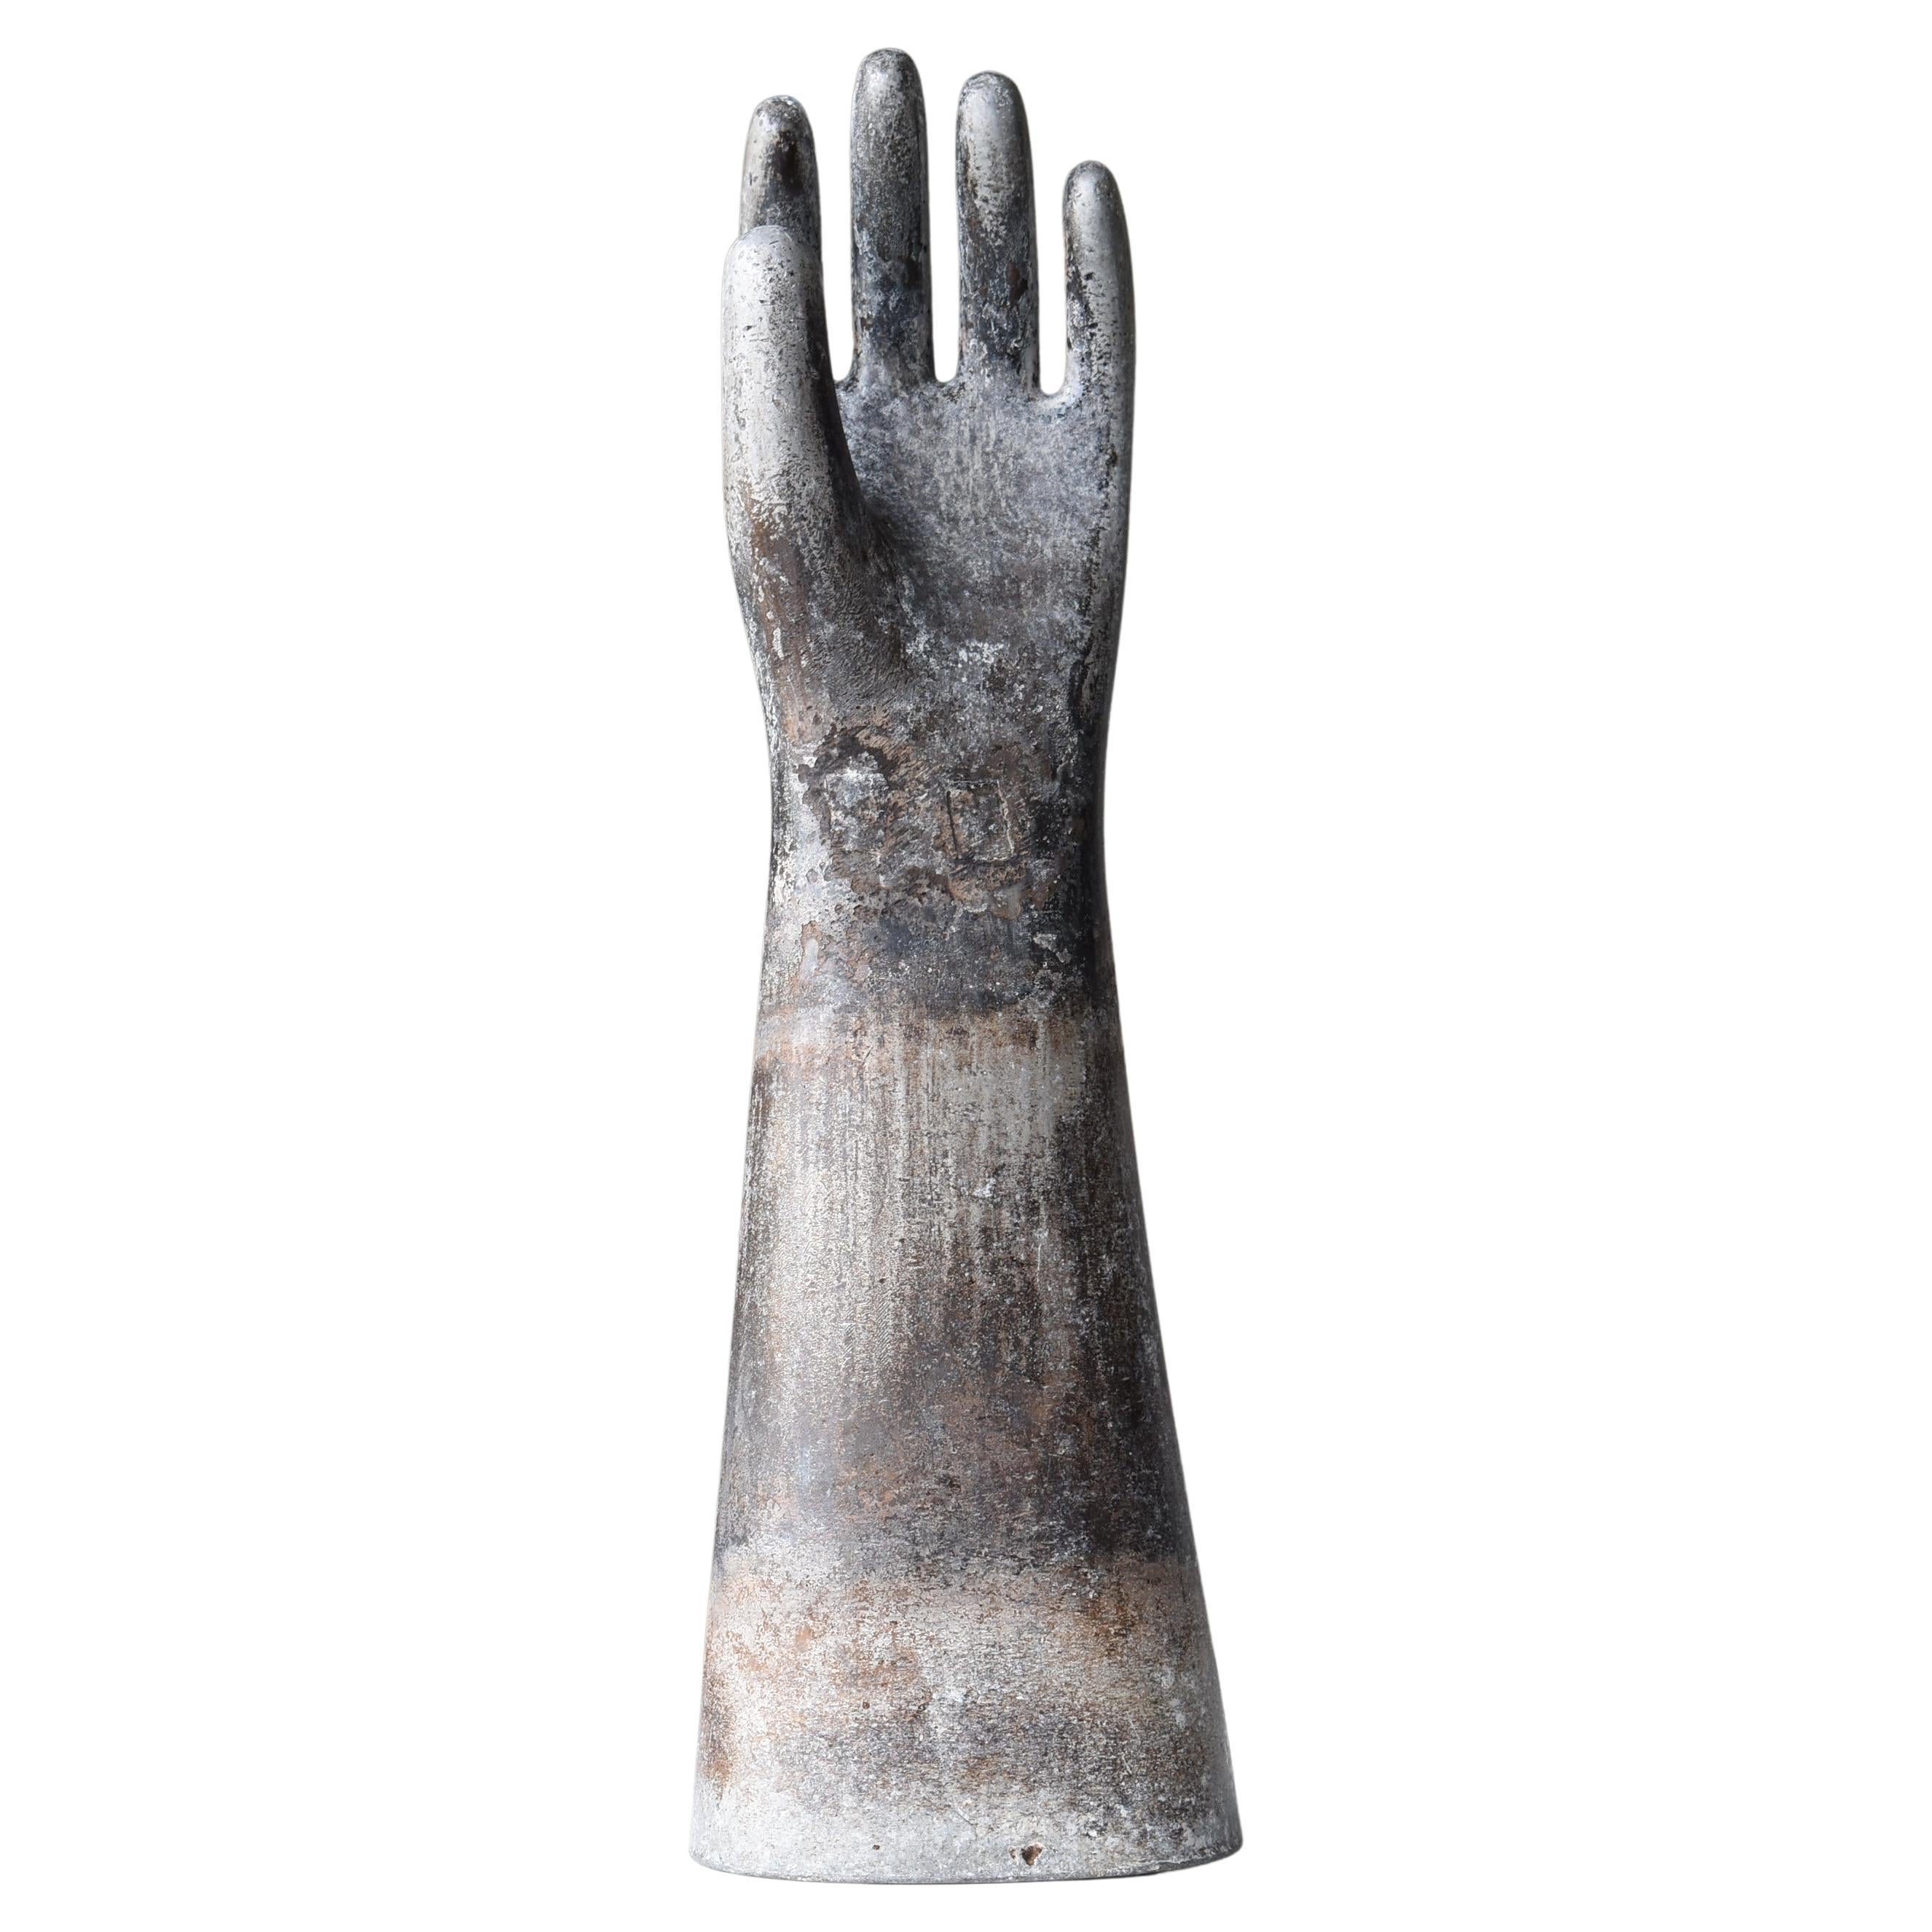 Japanese Antique Aluminum Glove Mold 1920s-1940s / Figurine Object Wabi Sabi